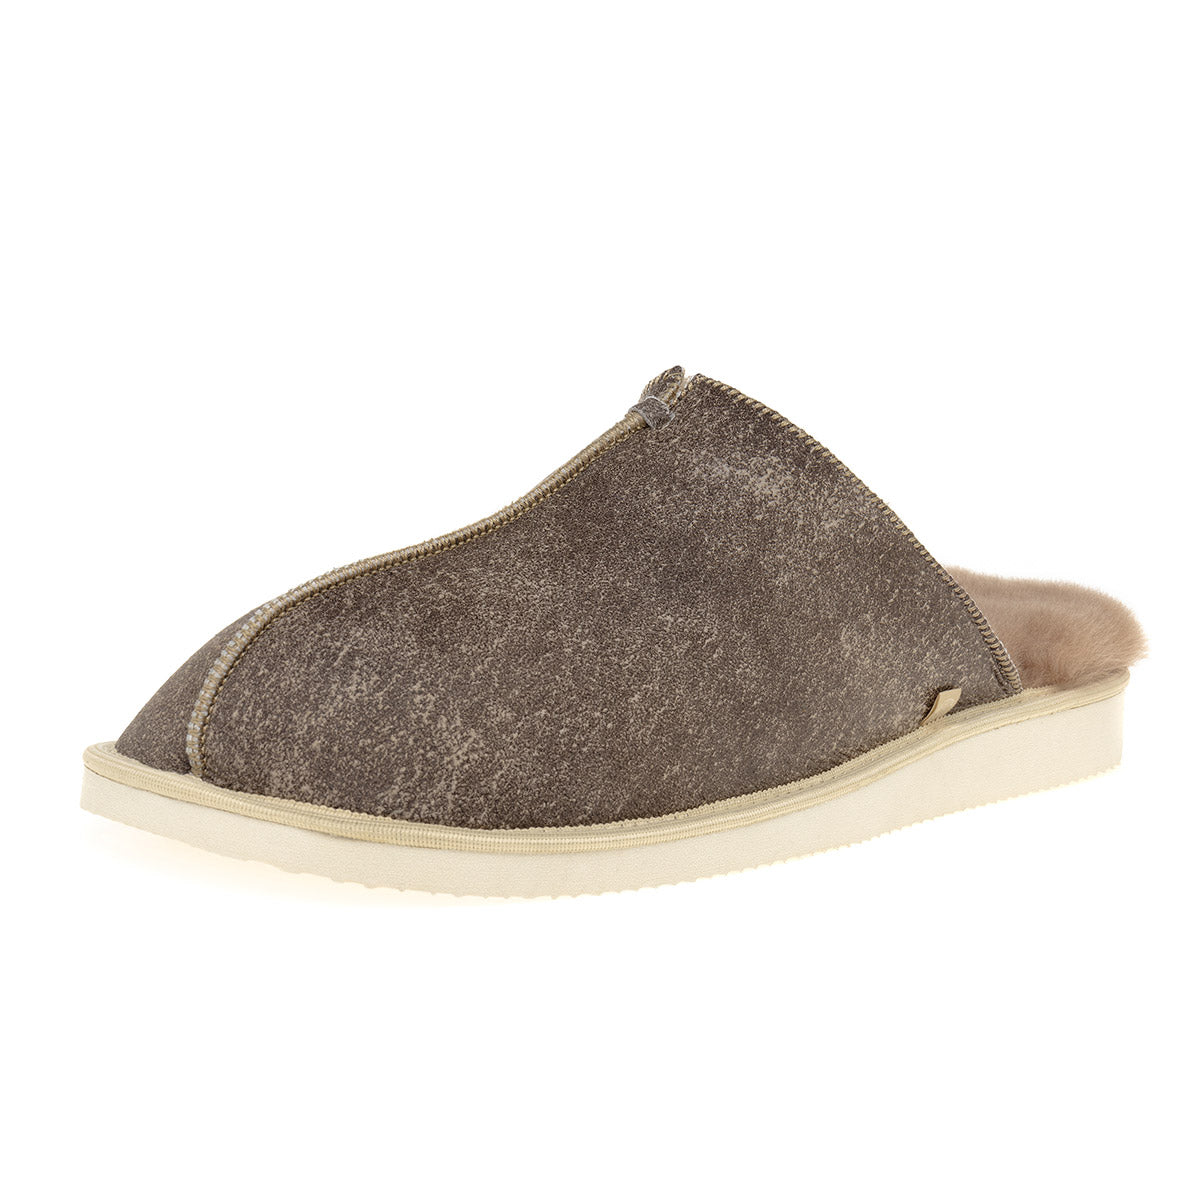 Machar Sheepskin Slippers - Nutmeg Distressed Leather